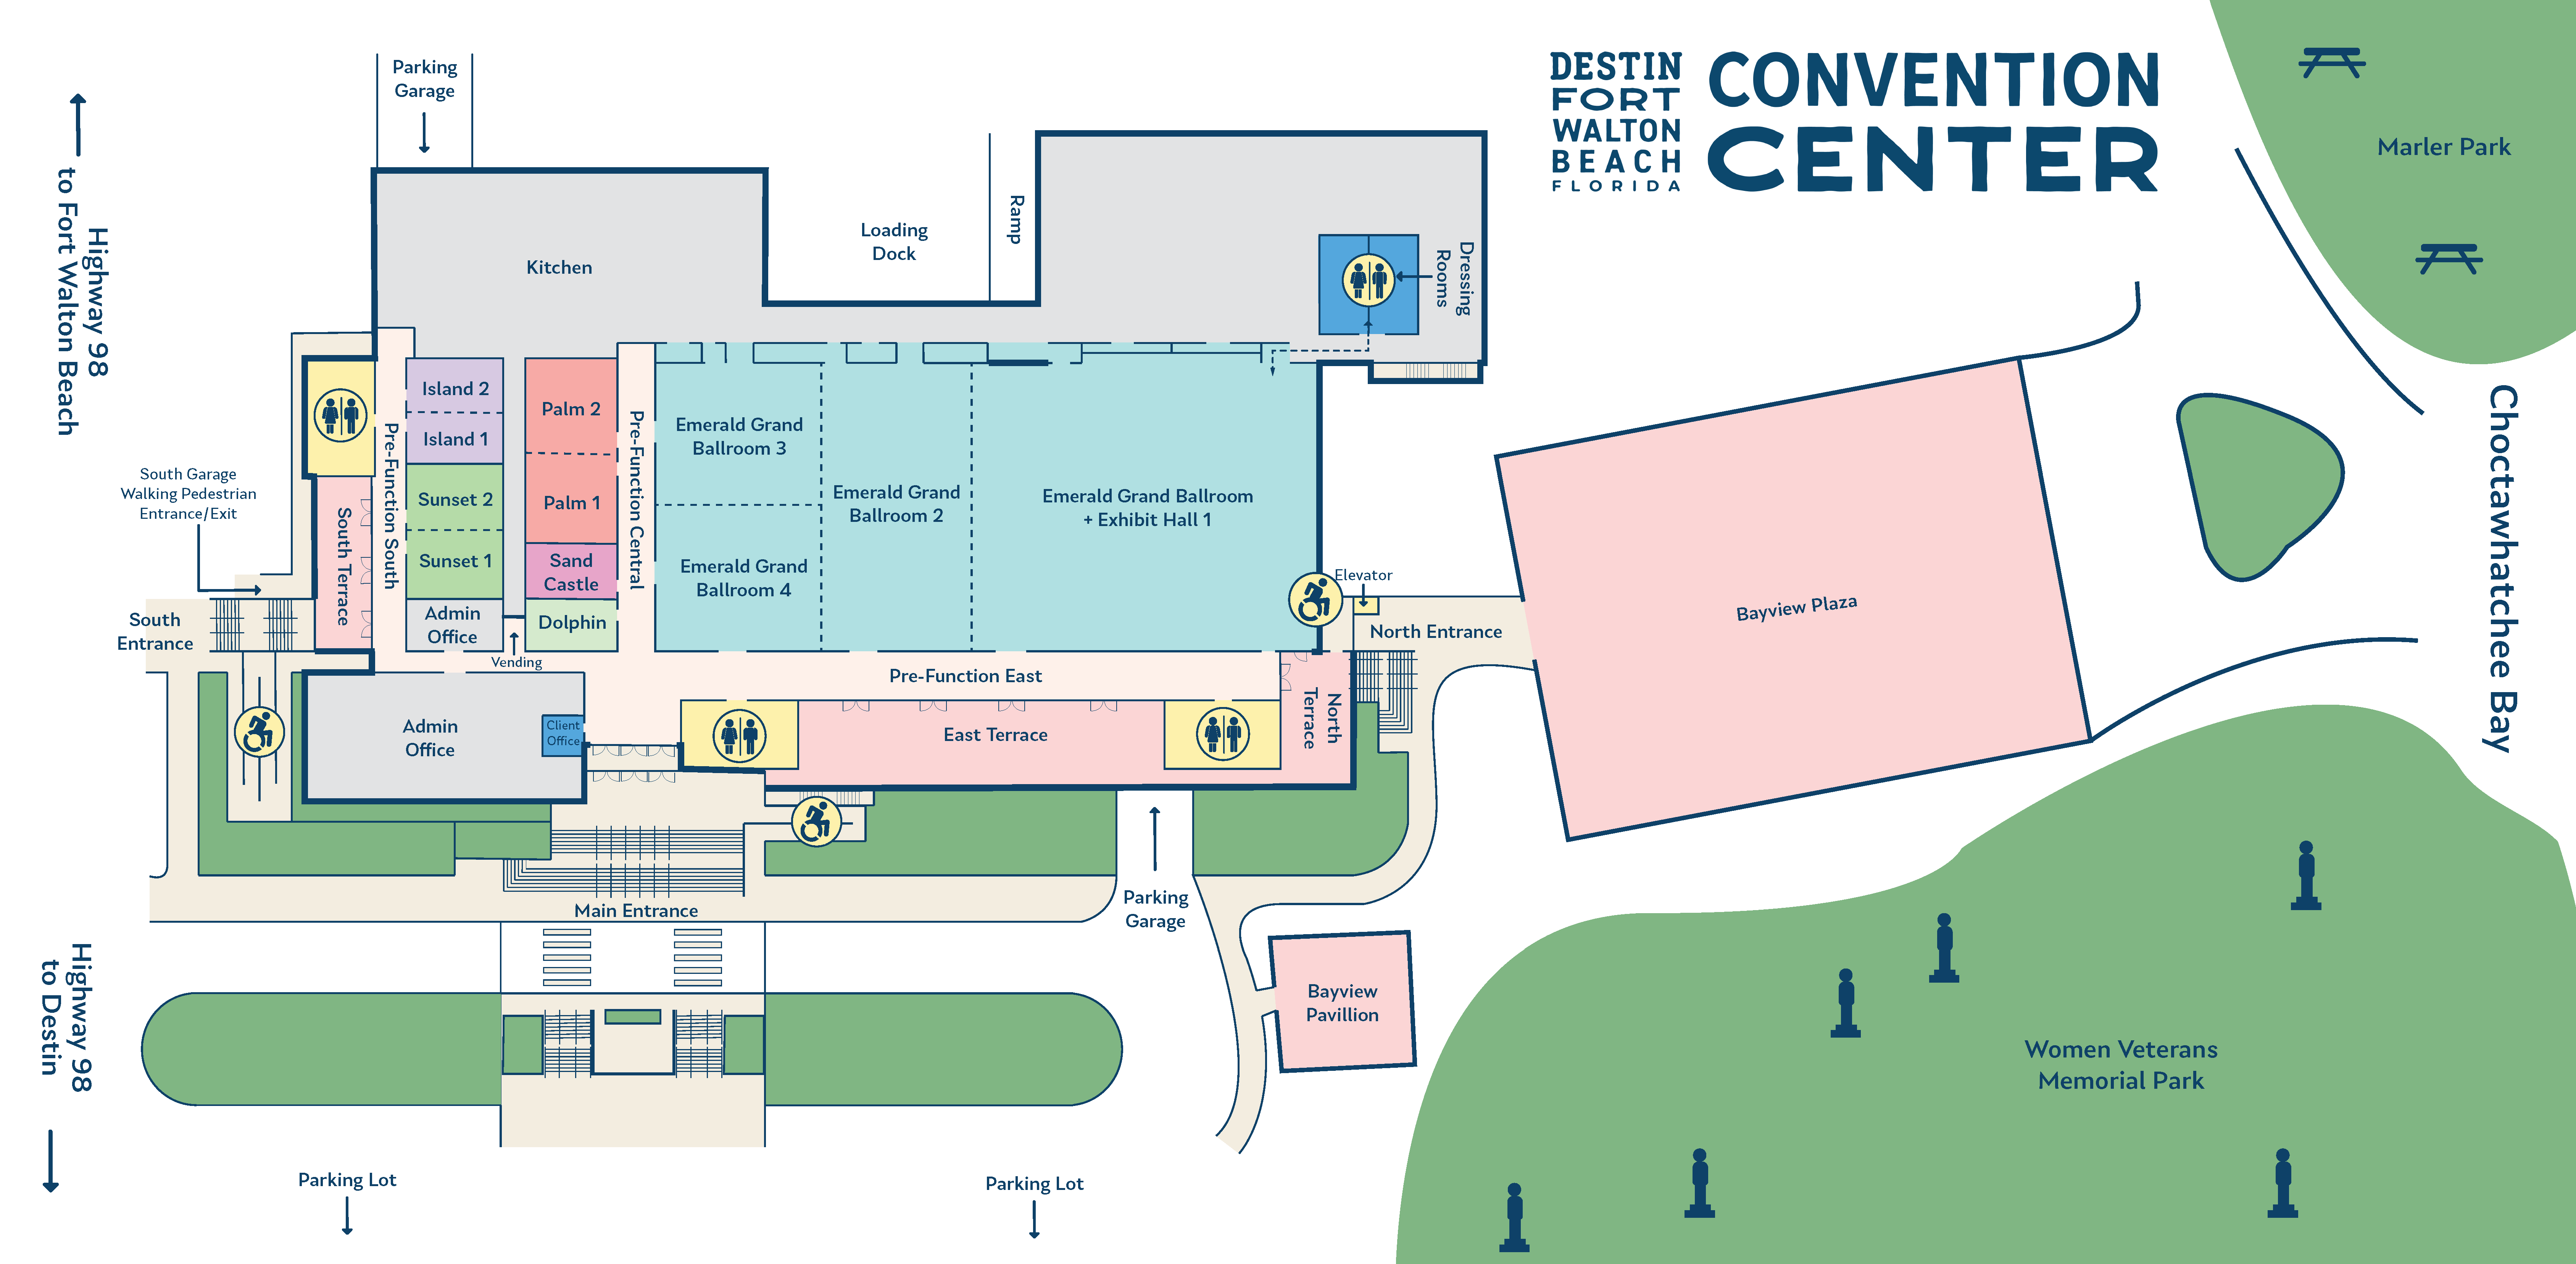 Destin-fort walton beach convention center